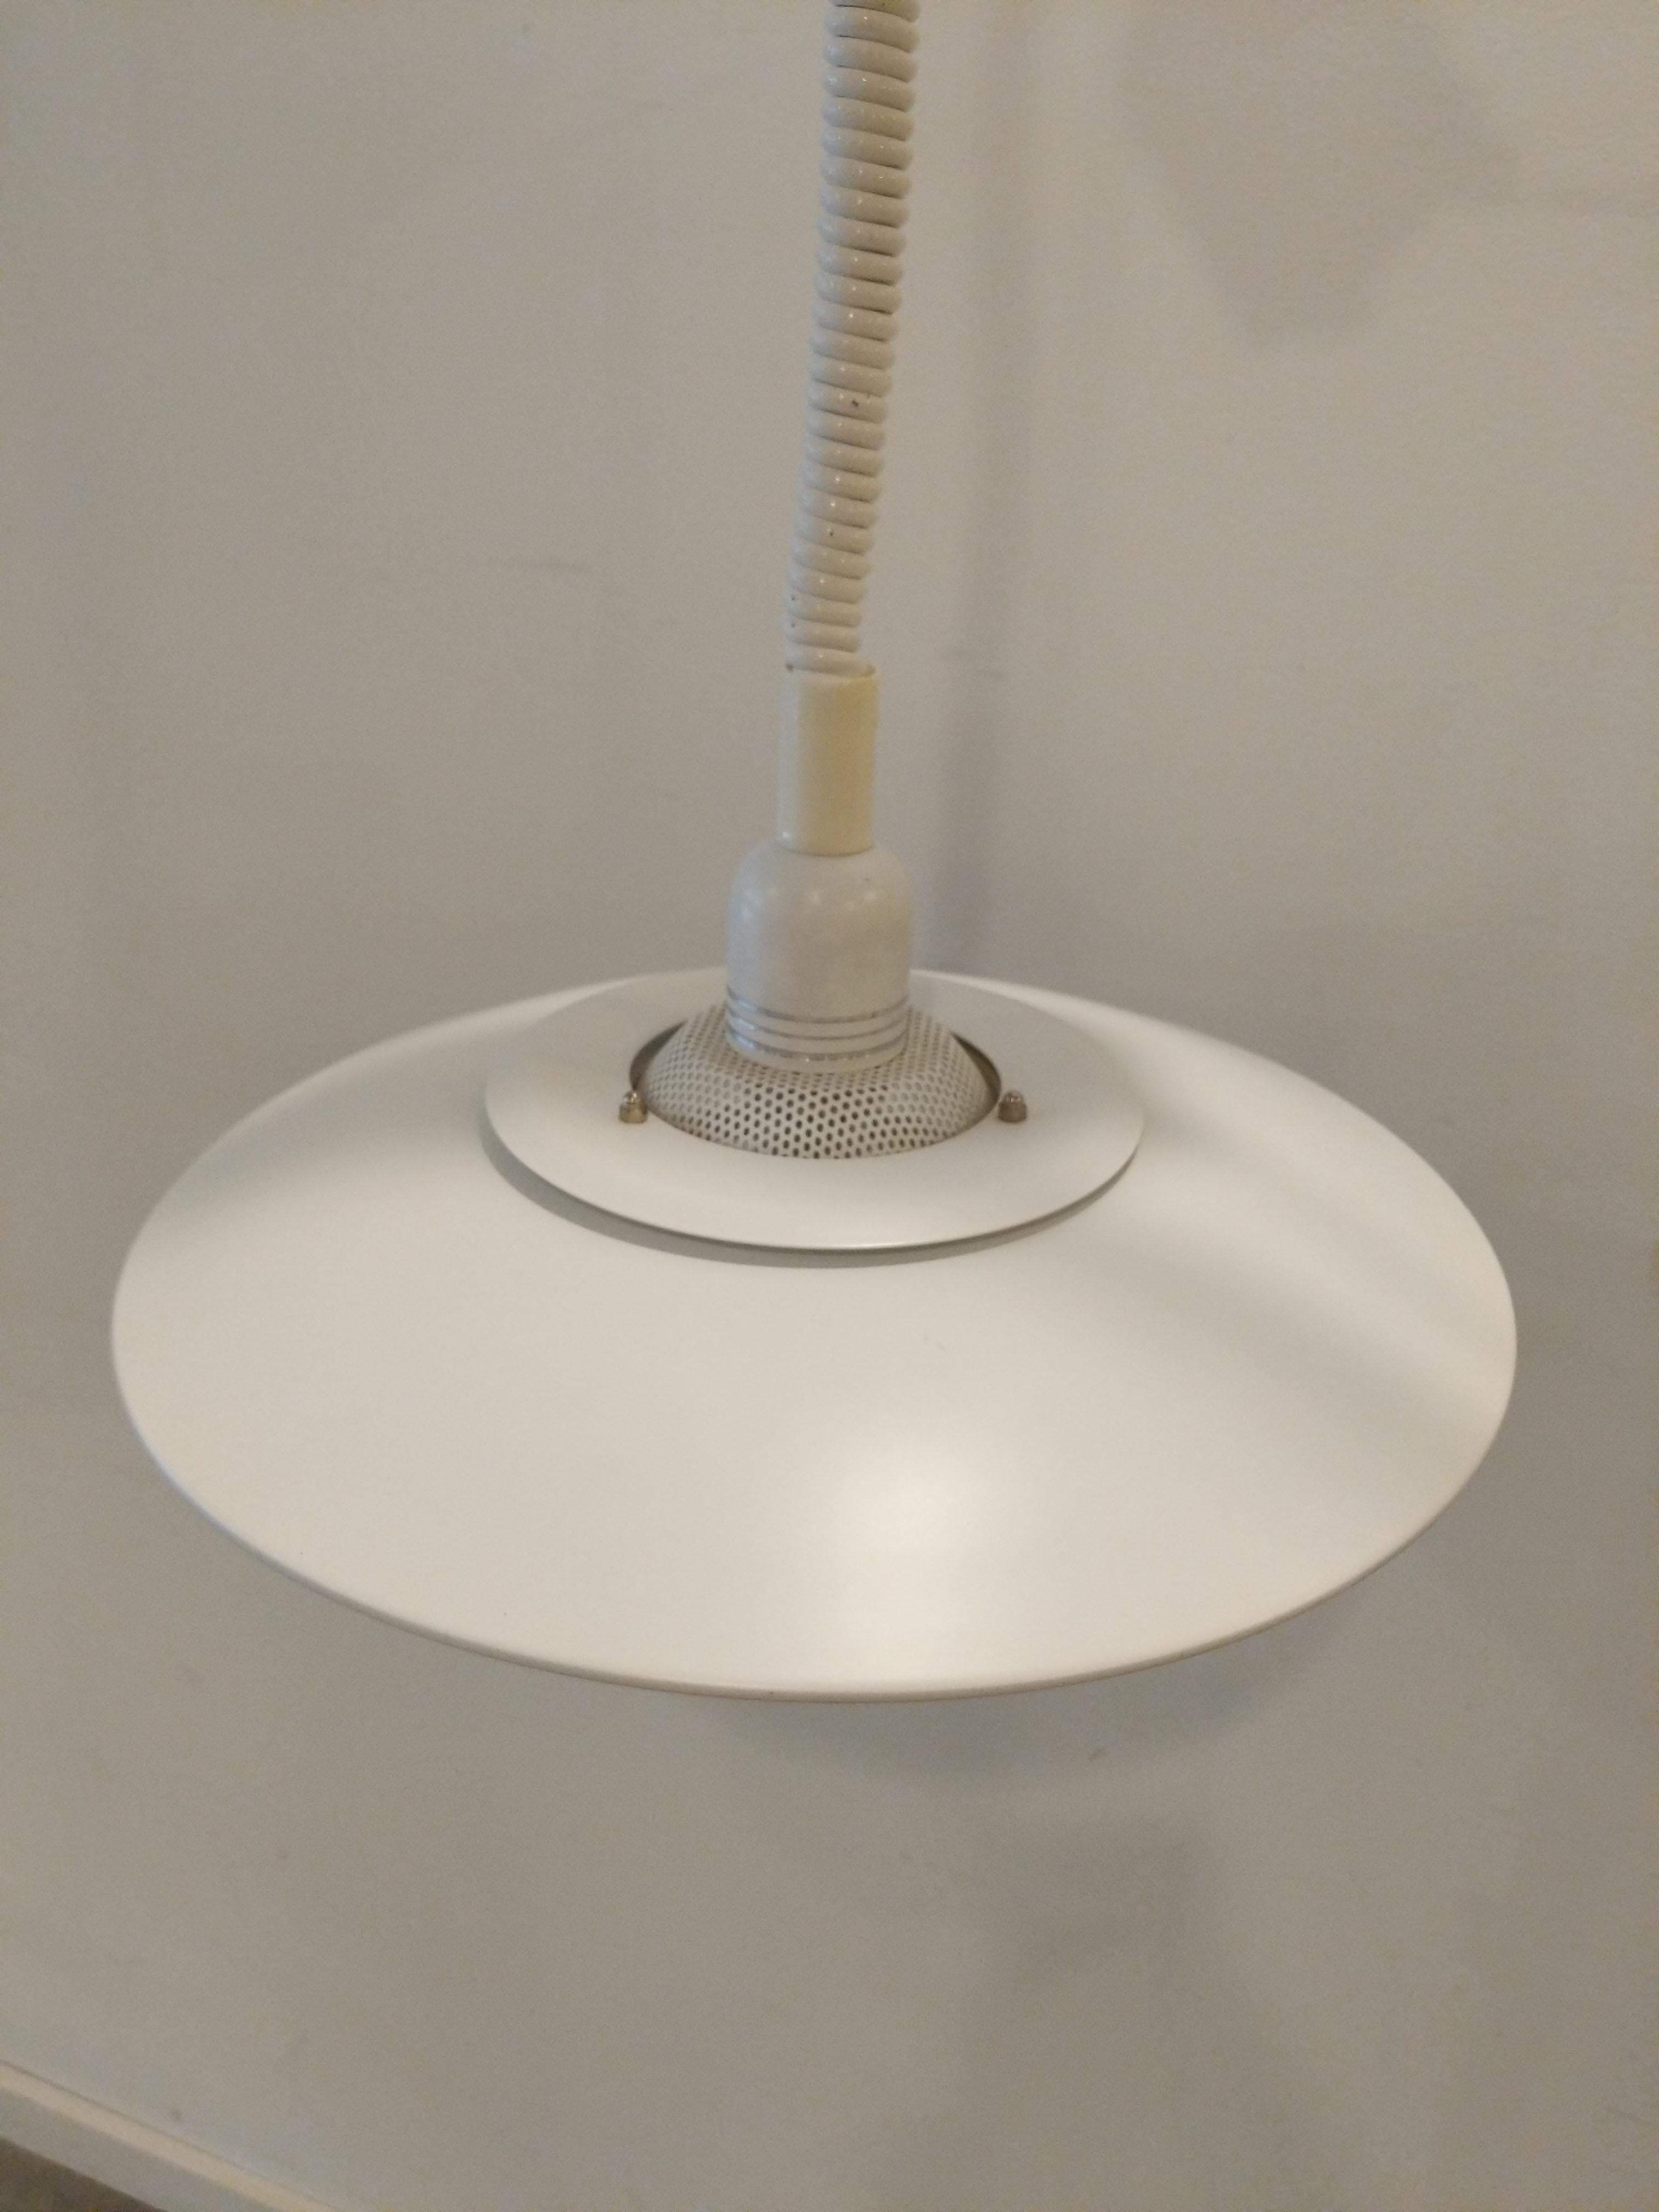 Authentic vintage mid century Danish / Scandinavian Modern hanging lamp / ceiling lamp / pendant light.

With adjustable-height 